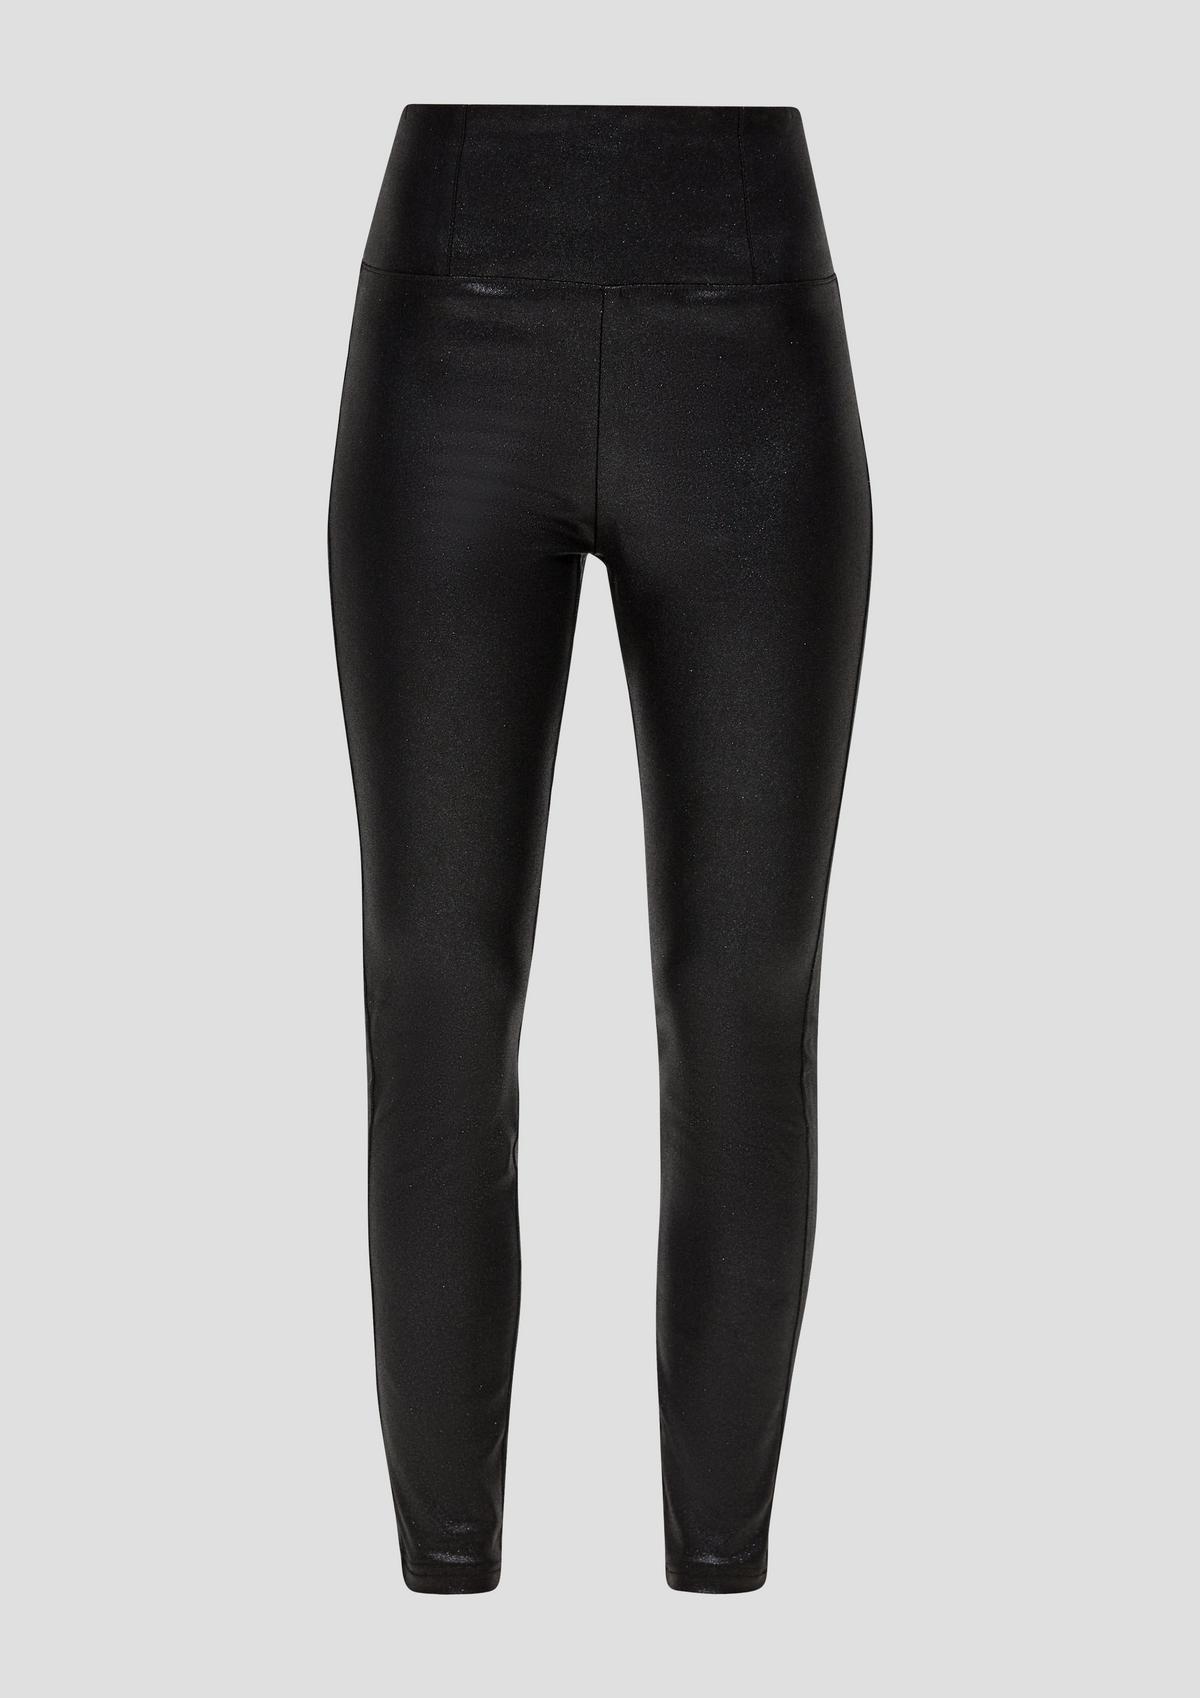 Slim fit: | design - a x in black leggings glittery QS Elif